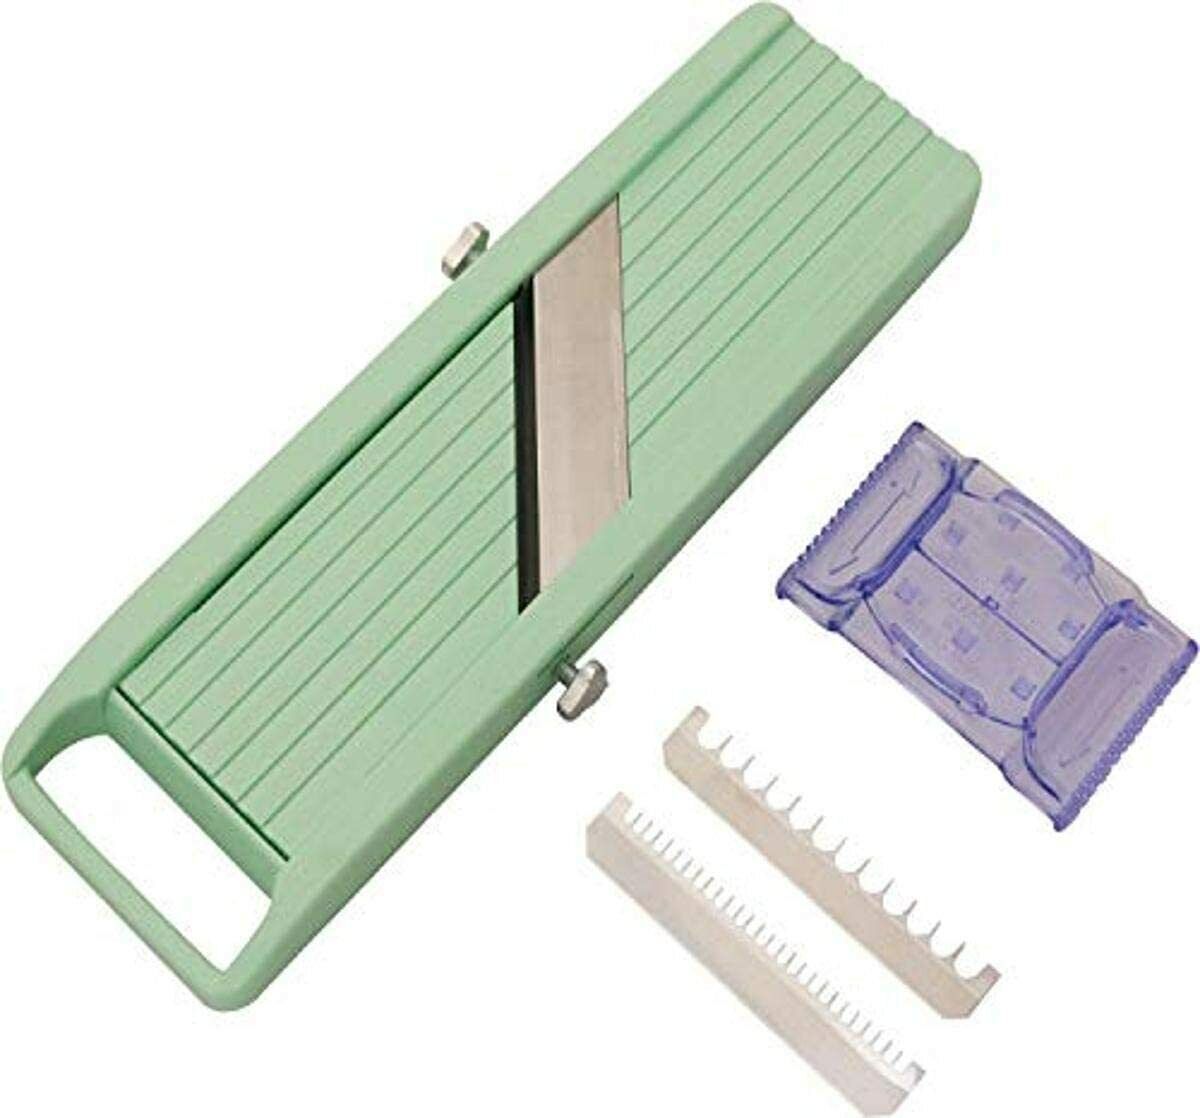 Benriner Japanese Slicer Green Three different replacement | eBay